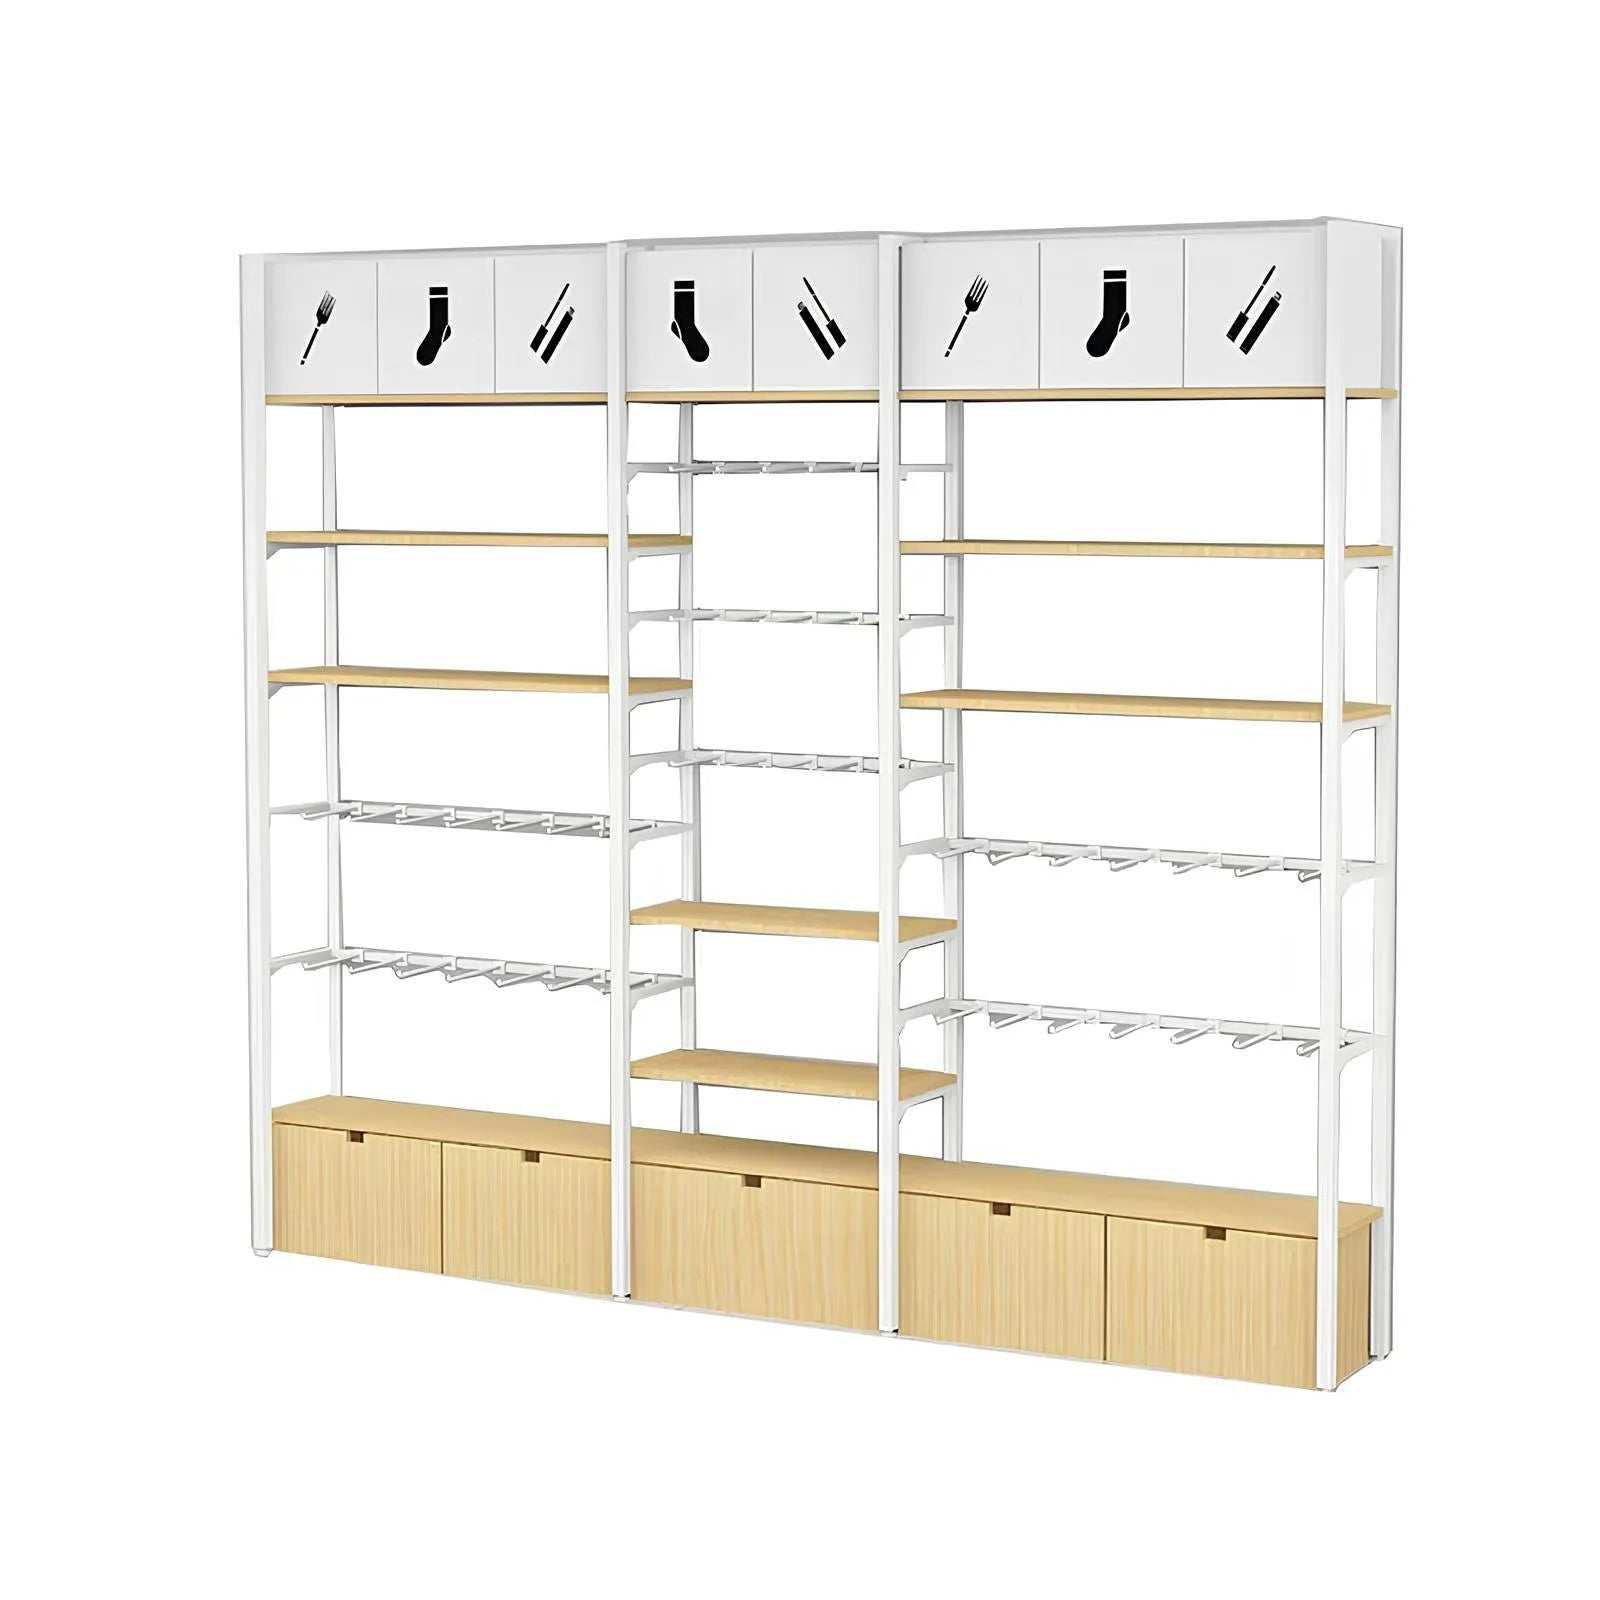 steel and wooden shelves wall shelving display - Kaso Shelves